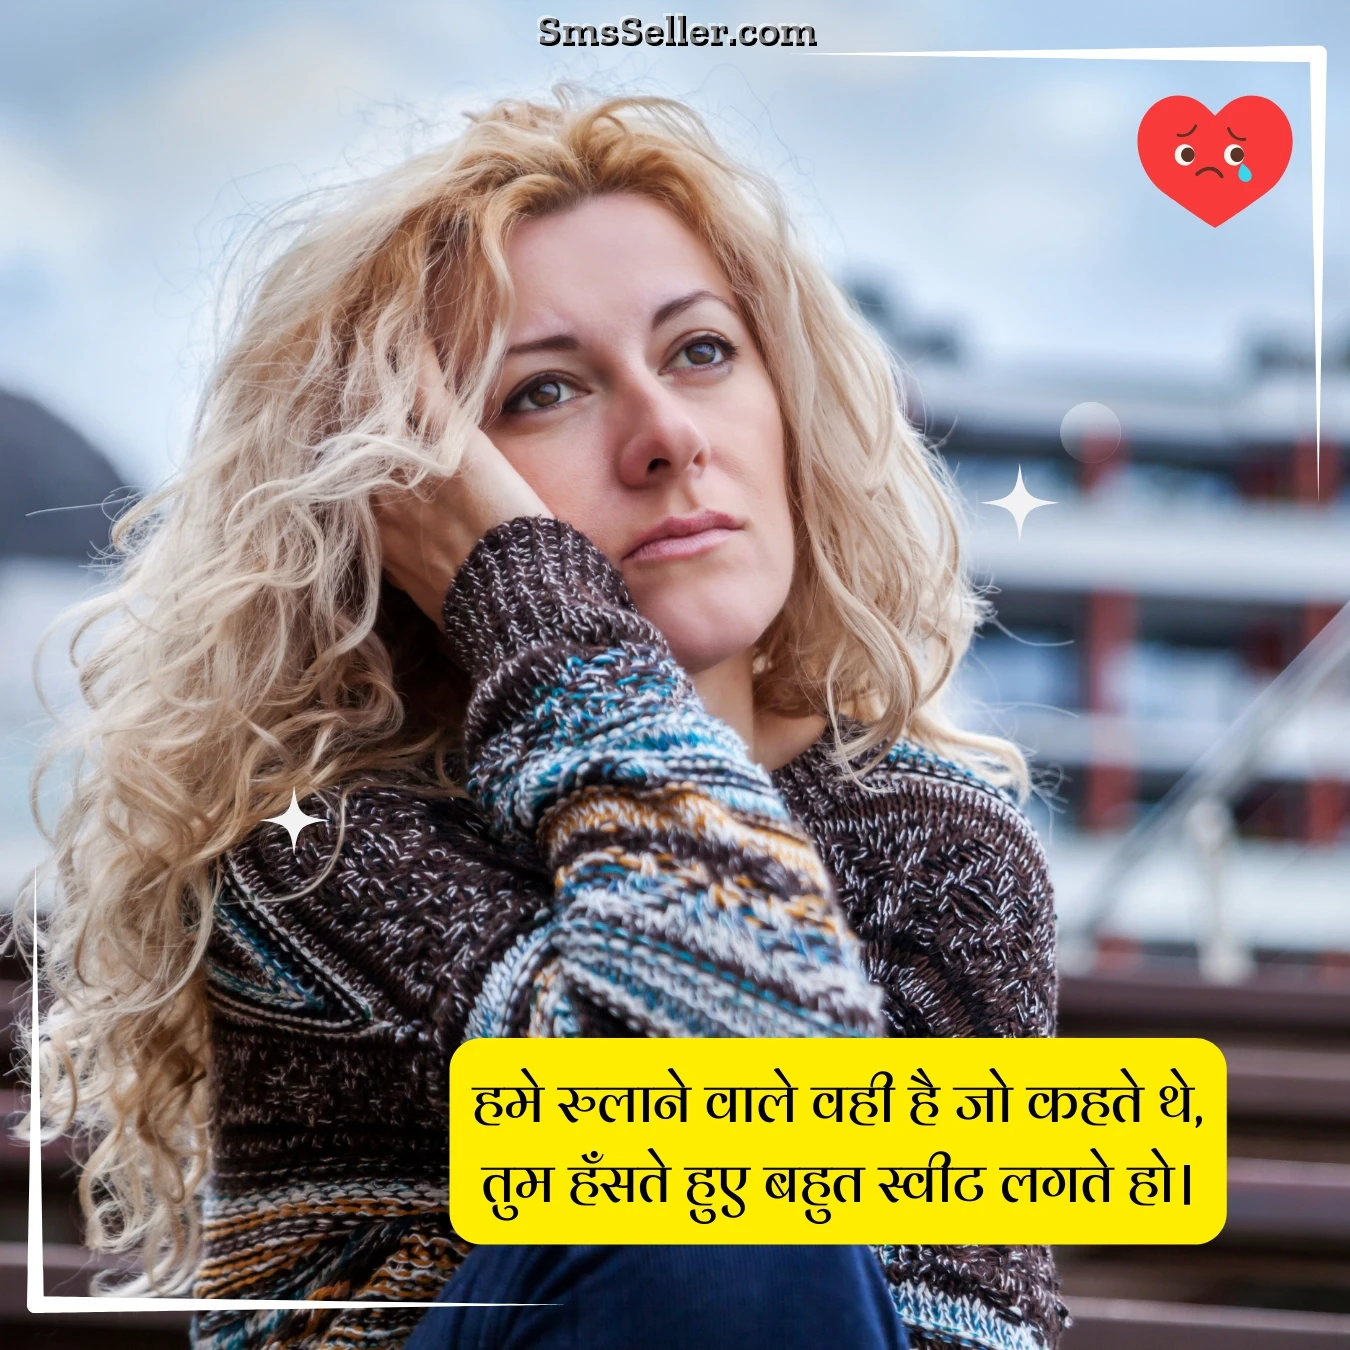 dard shayari in hindi rulaane wale hain vo